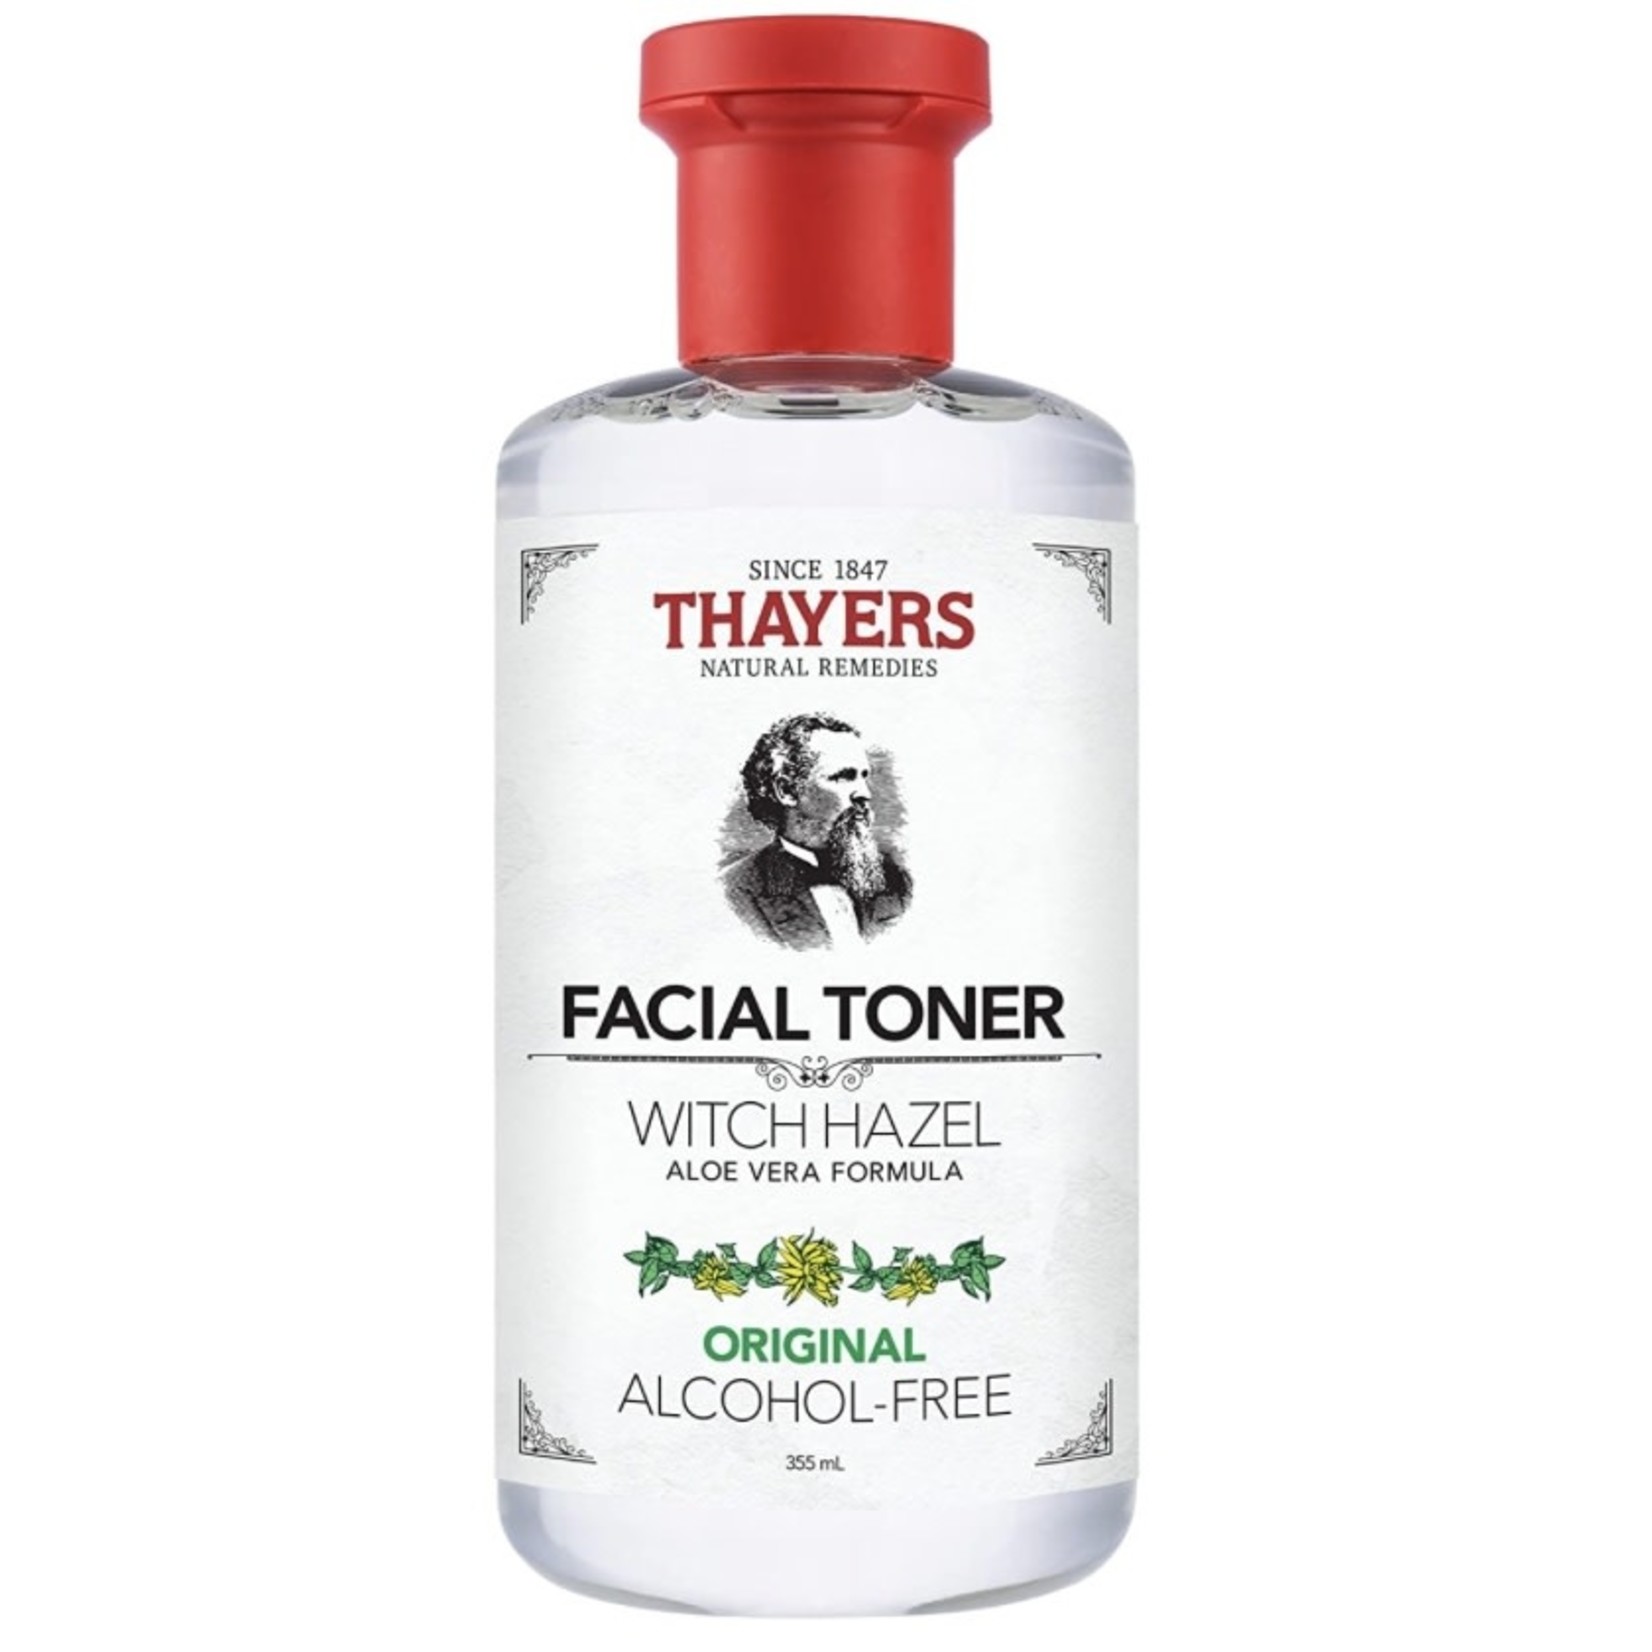 Thayers Thayers Witch Hazel Original Facial Toner 355ml